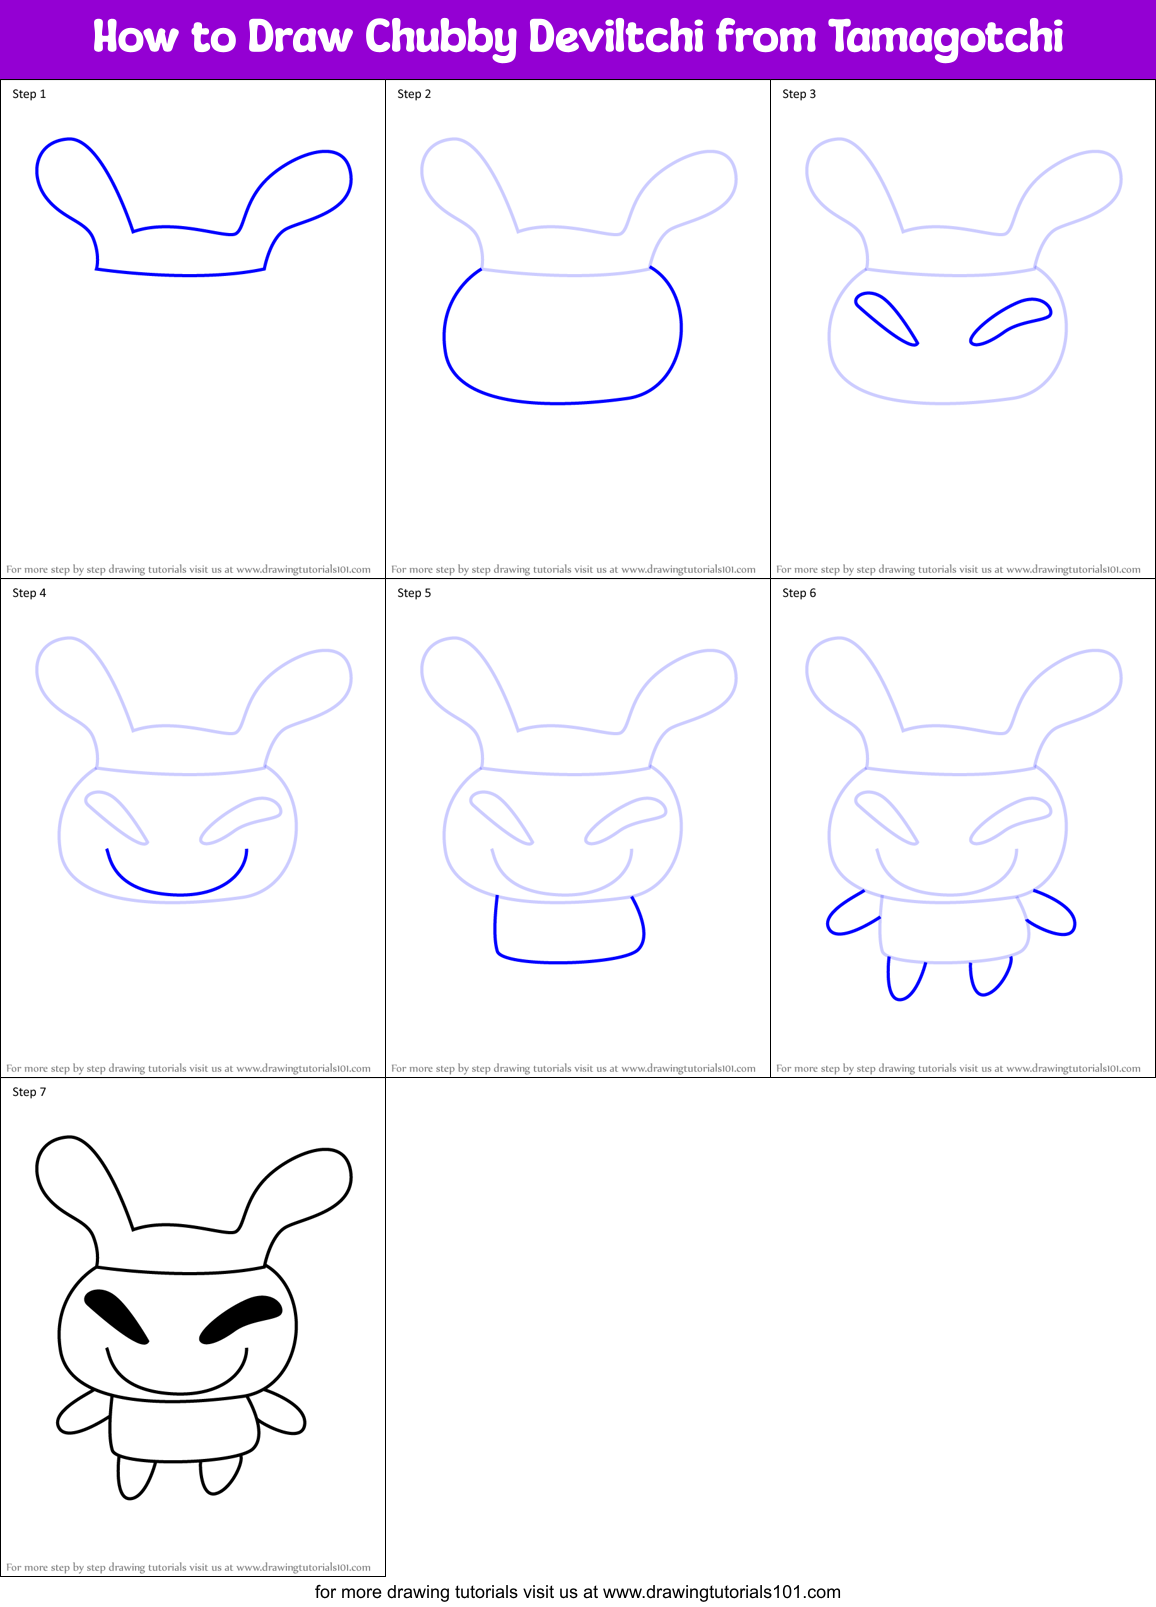 How to Draw Chubby Deviltchi from Tamagotchi (Tamagotchi) Step by Step ...